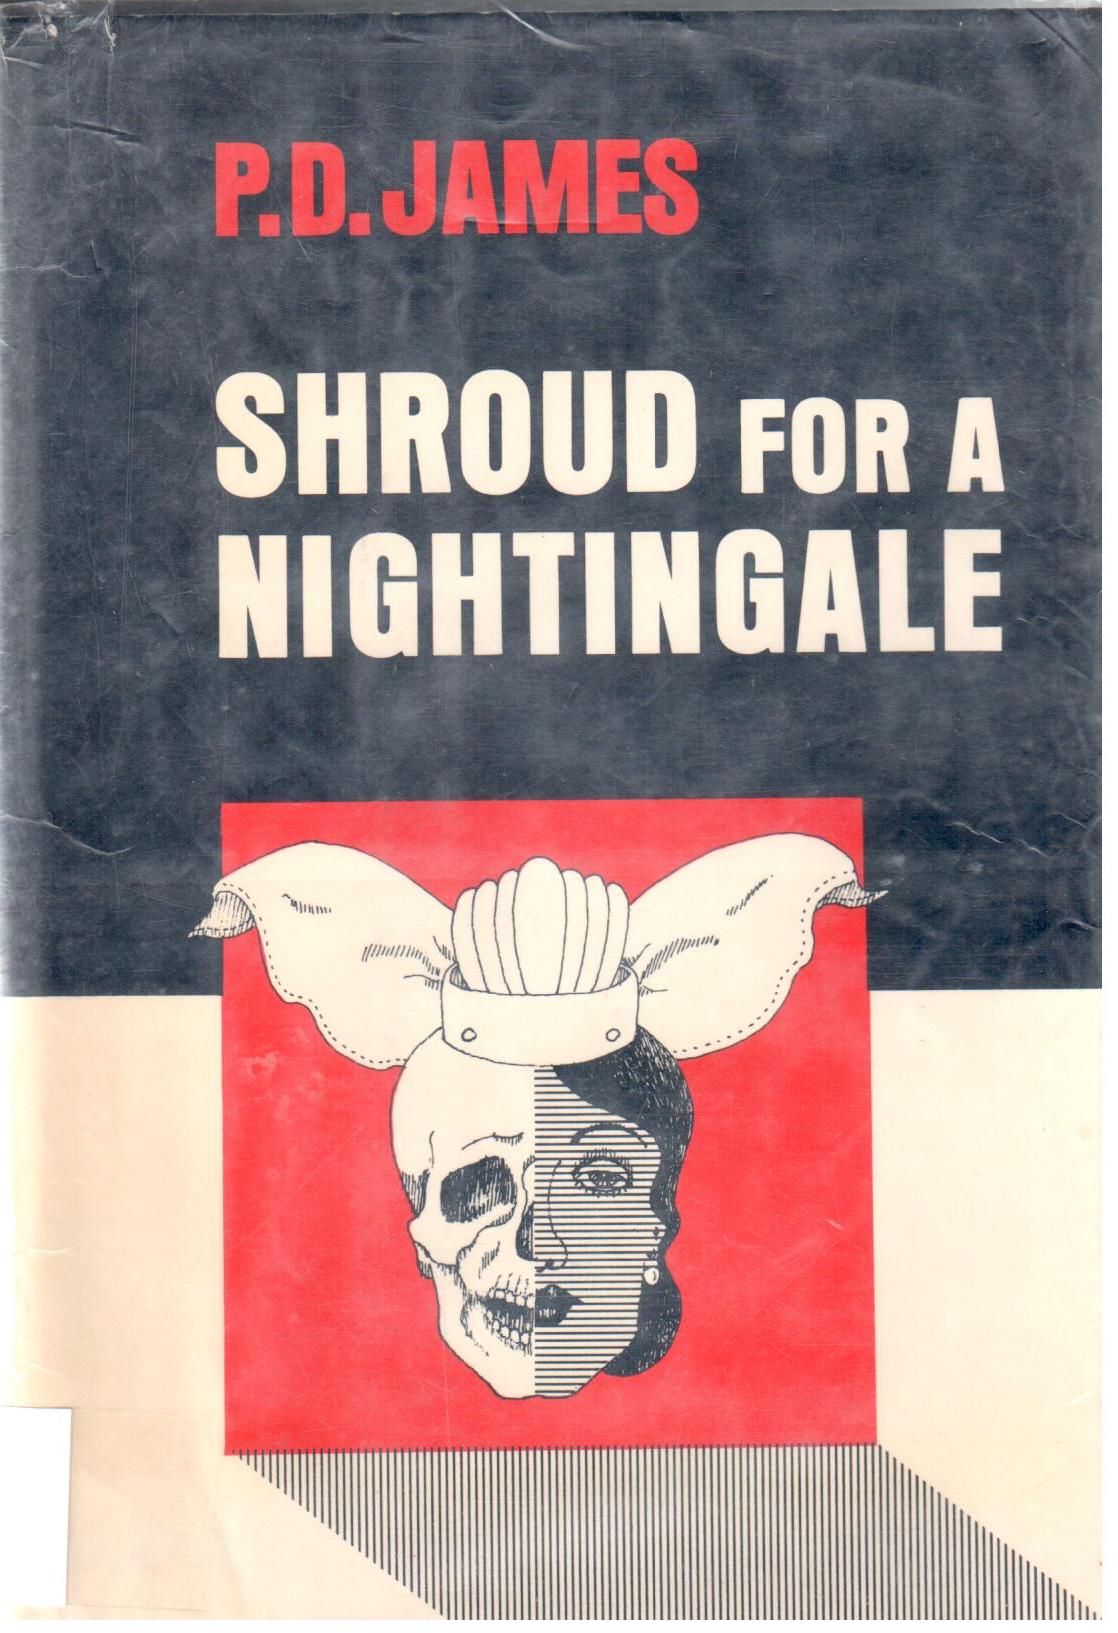 Shroud for a nightingale,